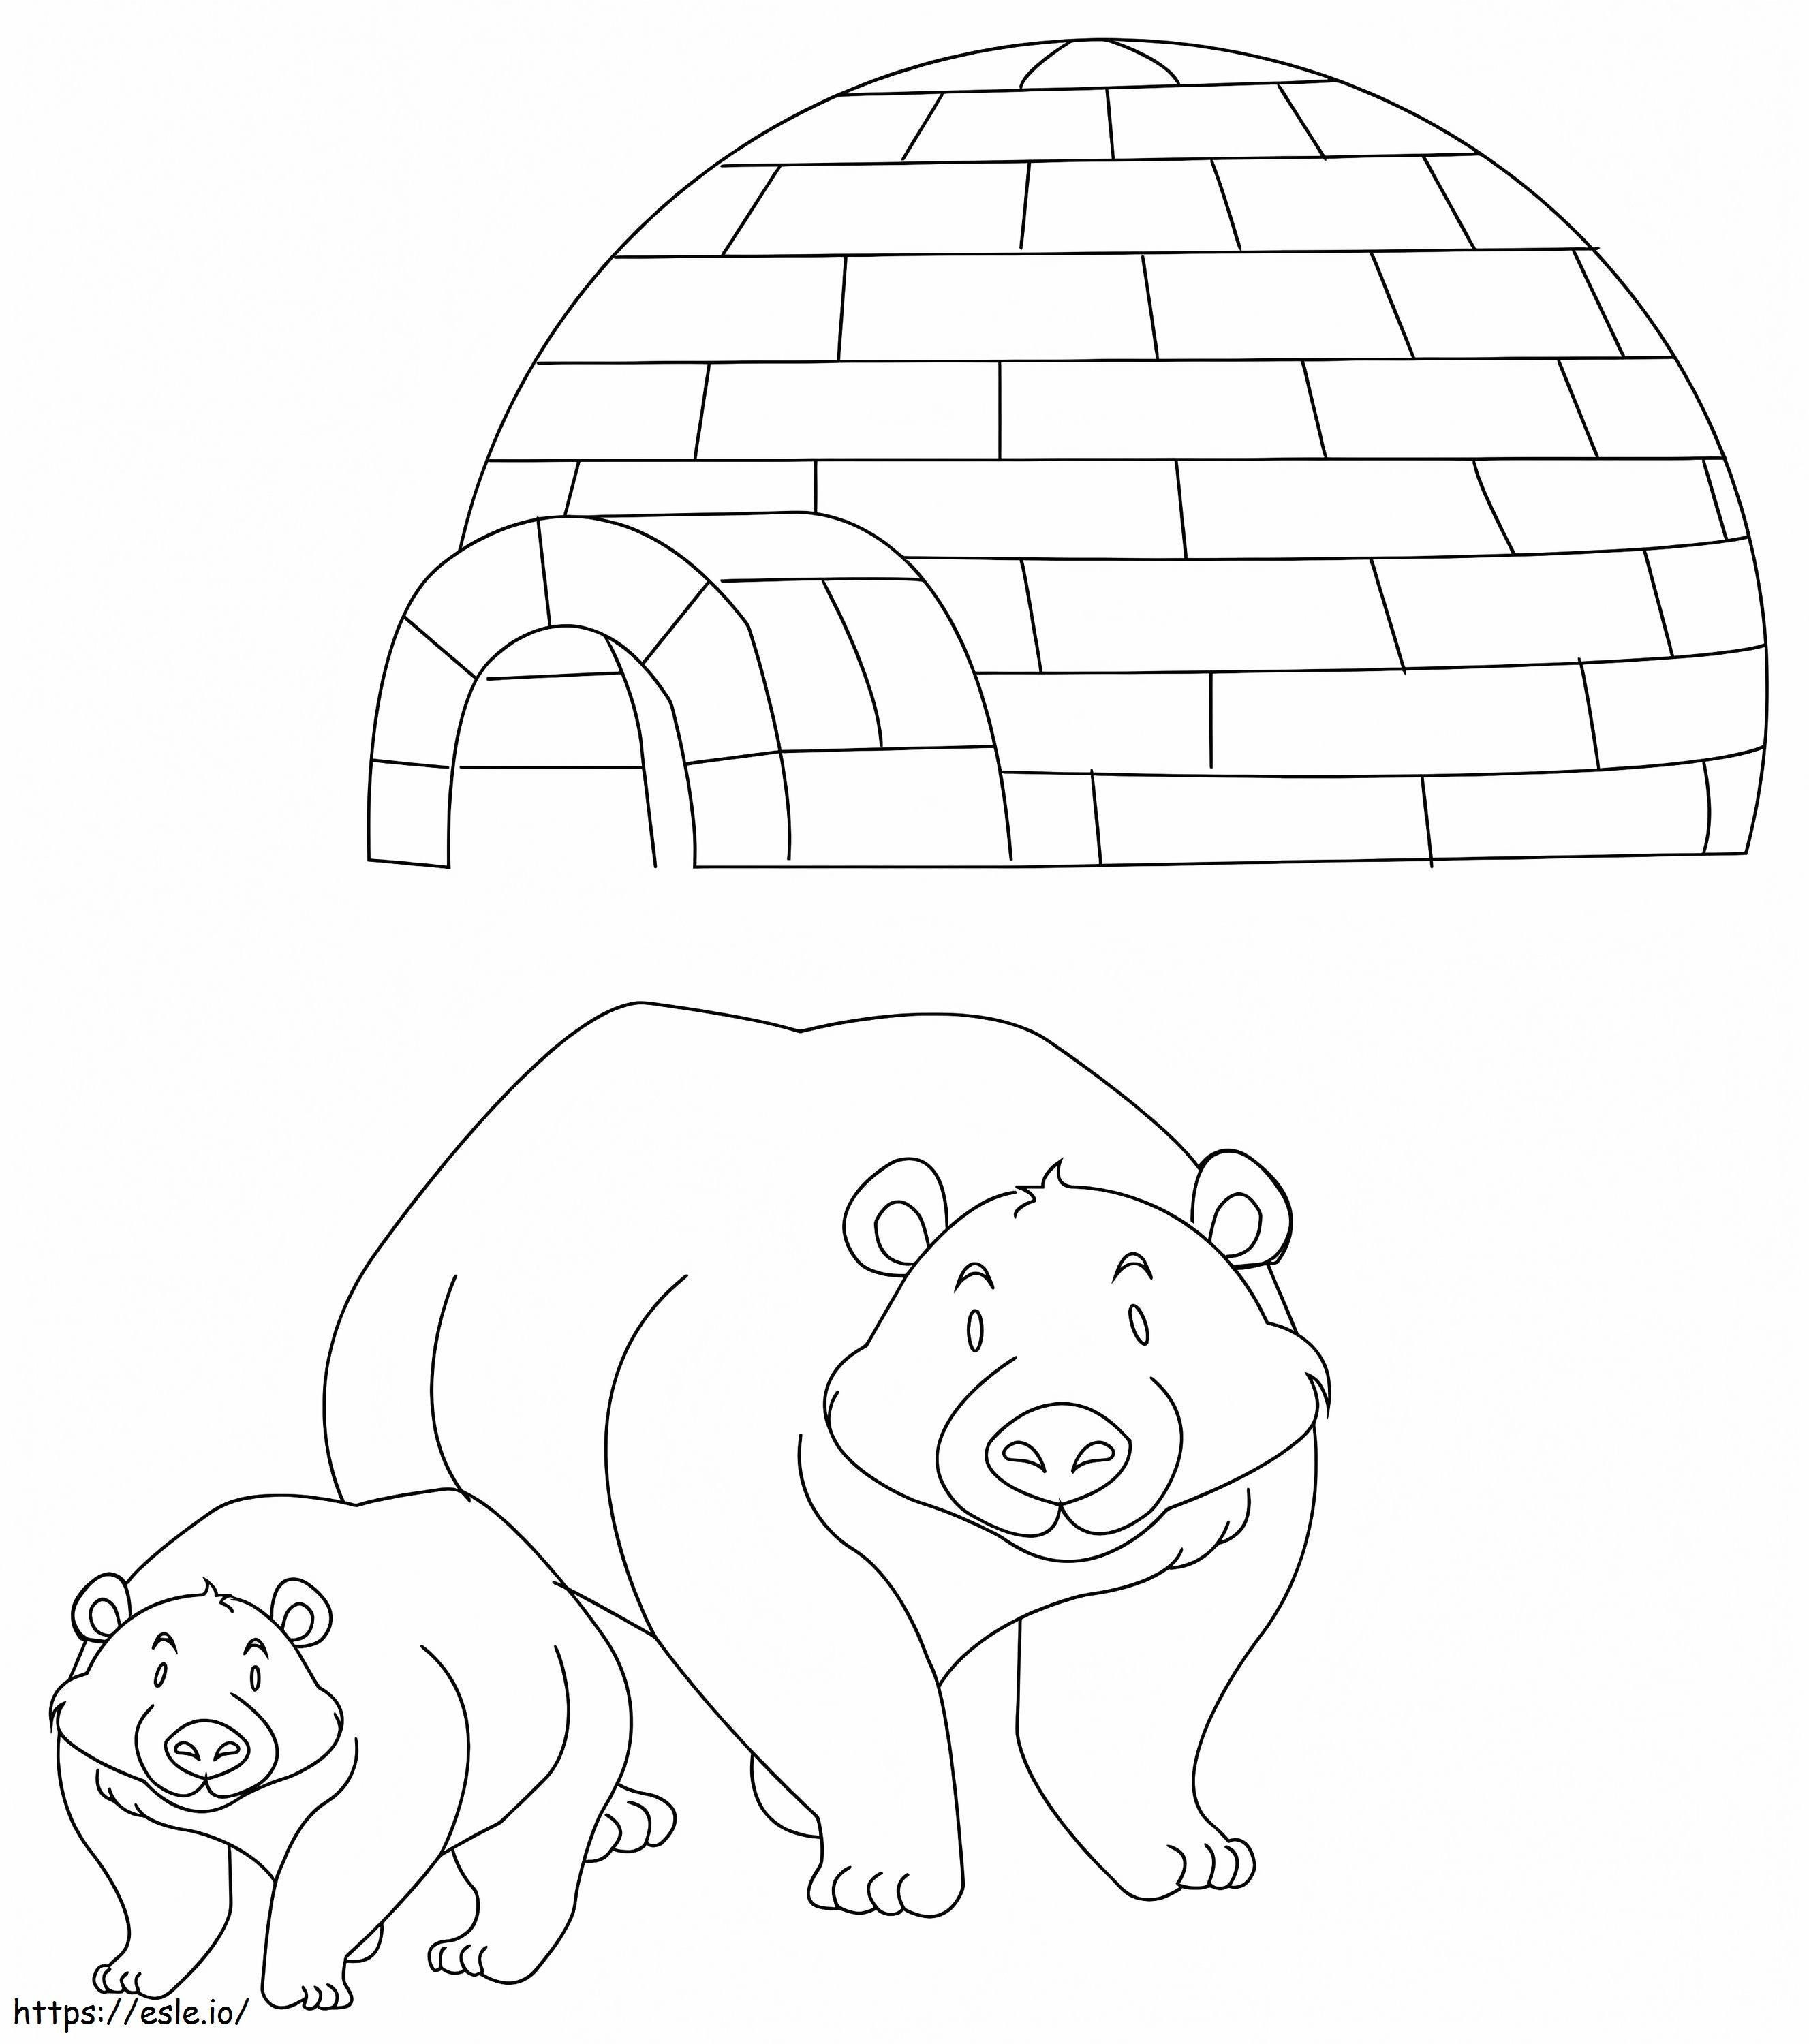 Igloo And Polar Bears coloring page